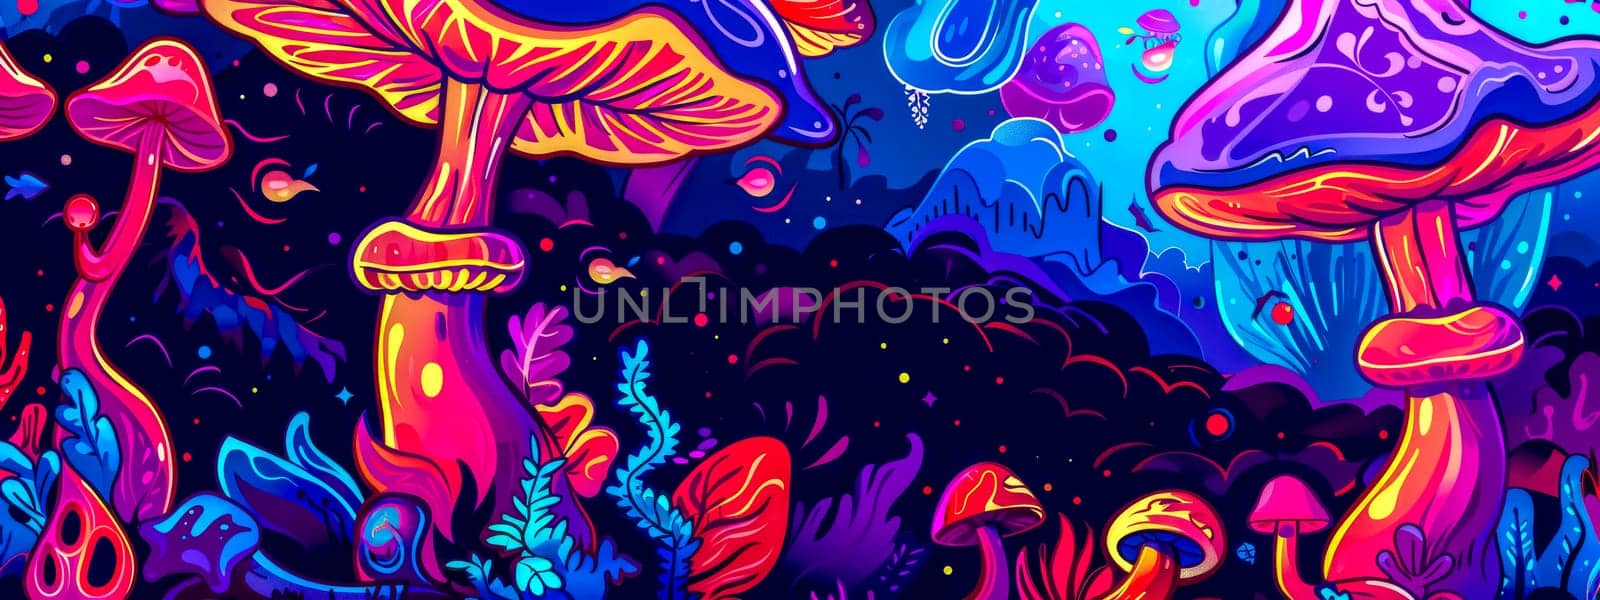 Enchanted neon forest panorama - fantasy mushroom landscape by Edophoto